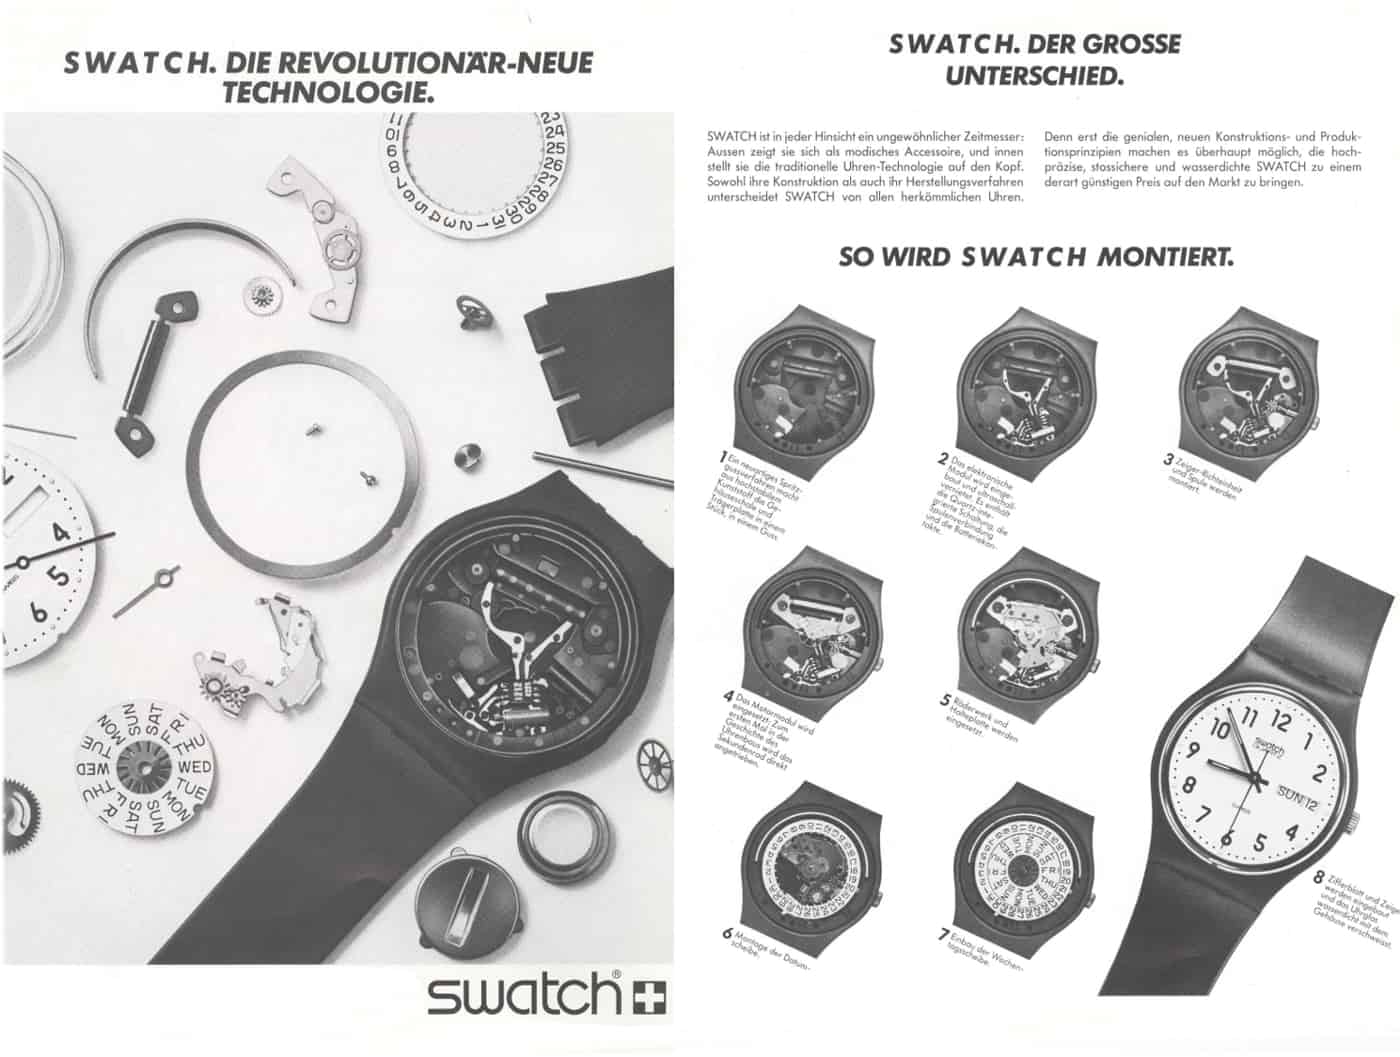 Swatch Flyer 1983